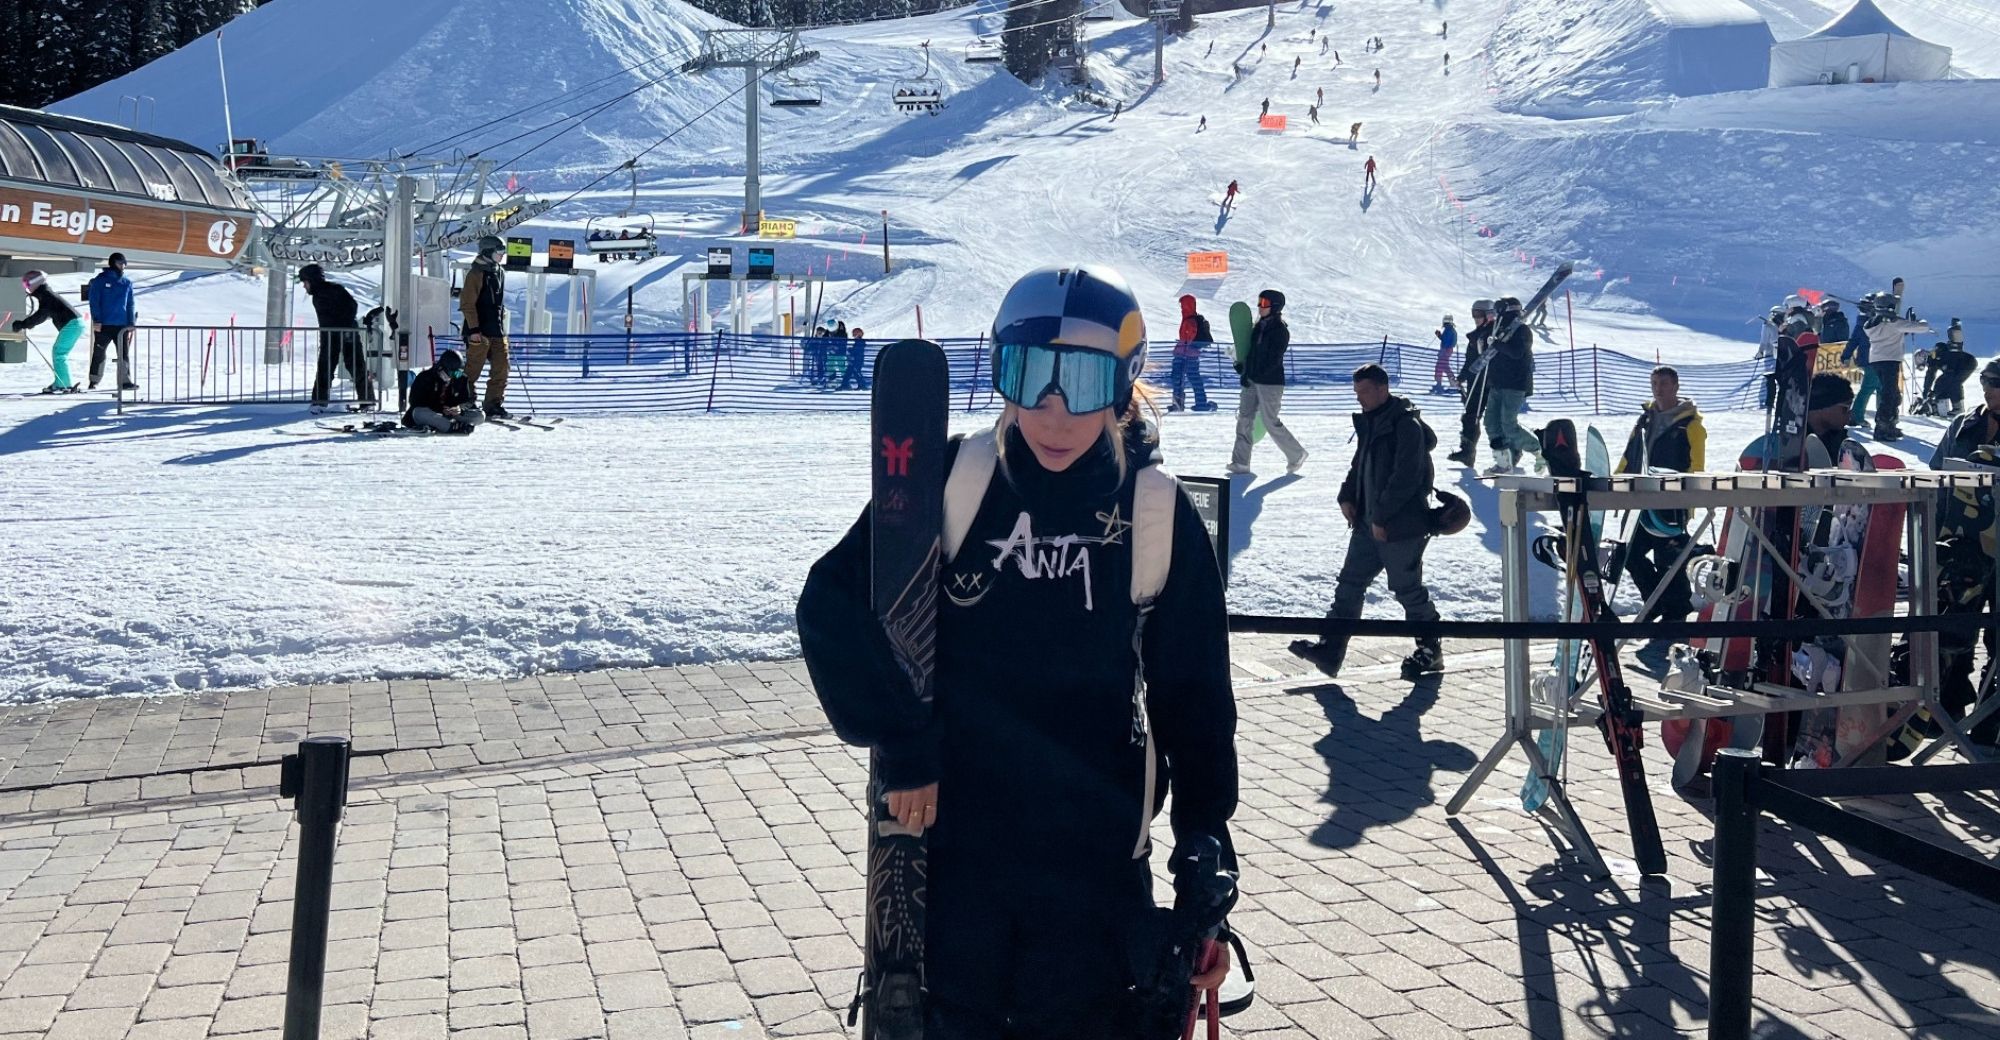 Olympic Champion Skier Eileen Gu Breaks New World Record